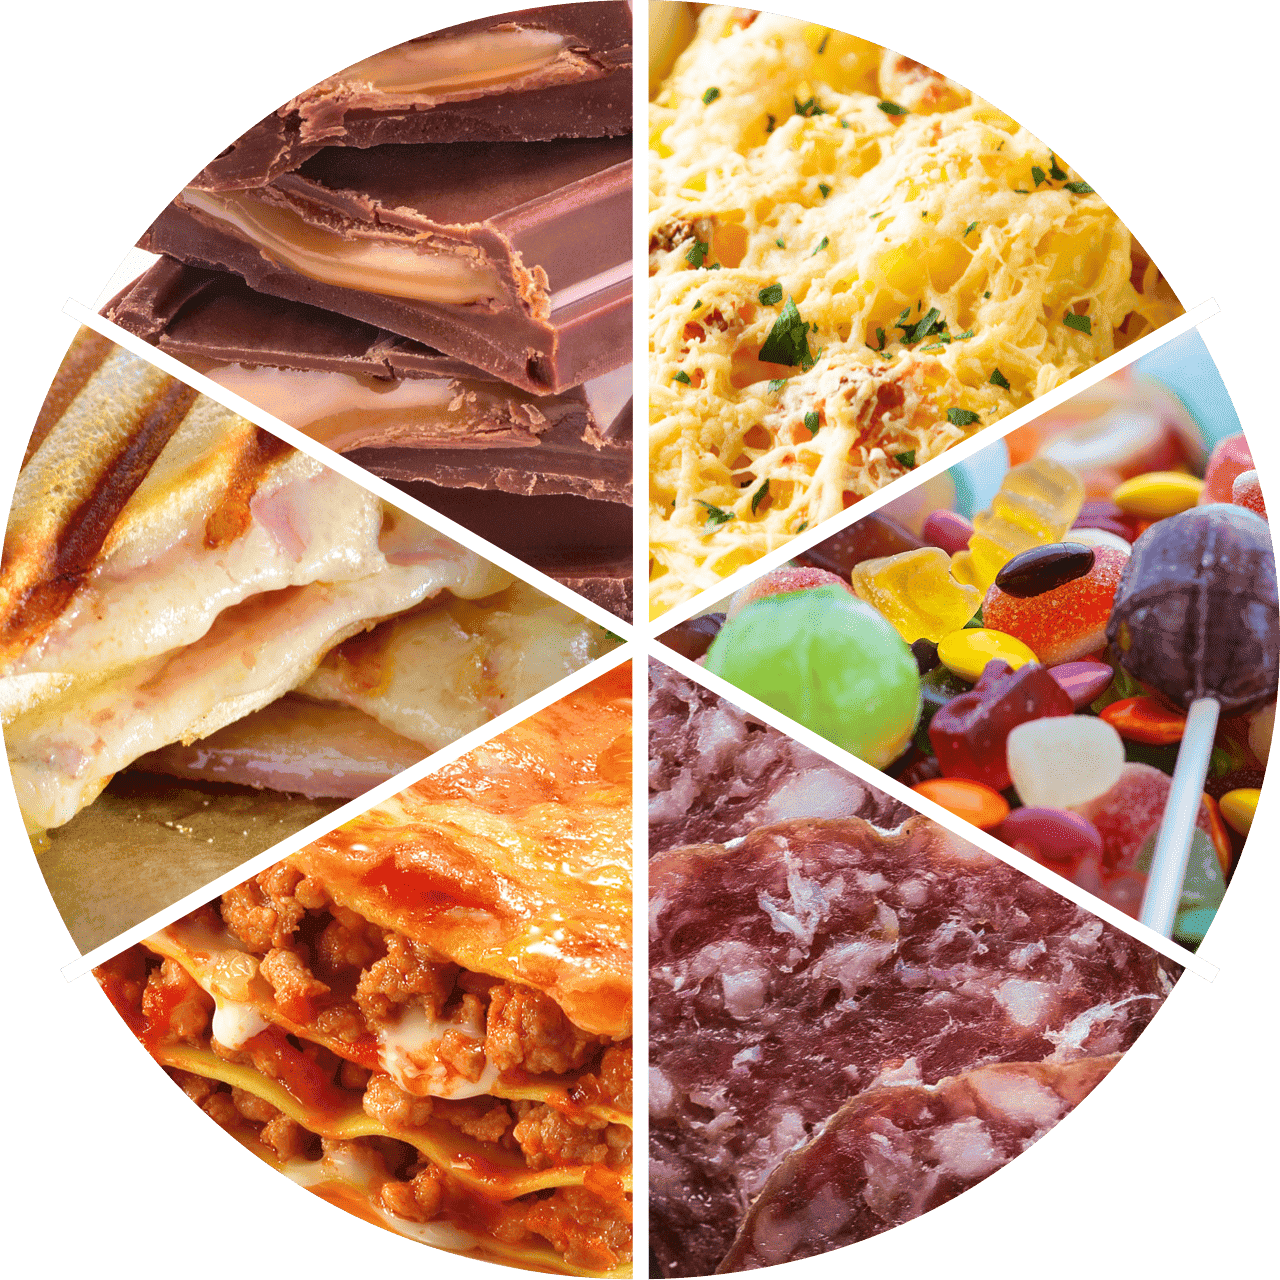 Entzündungsfördernde Lebensmittel: Salami, Lasagne, Verarbeitete Lebensmittel, Schokolade, Süßigkeiten